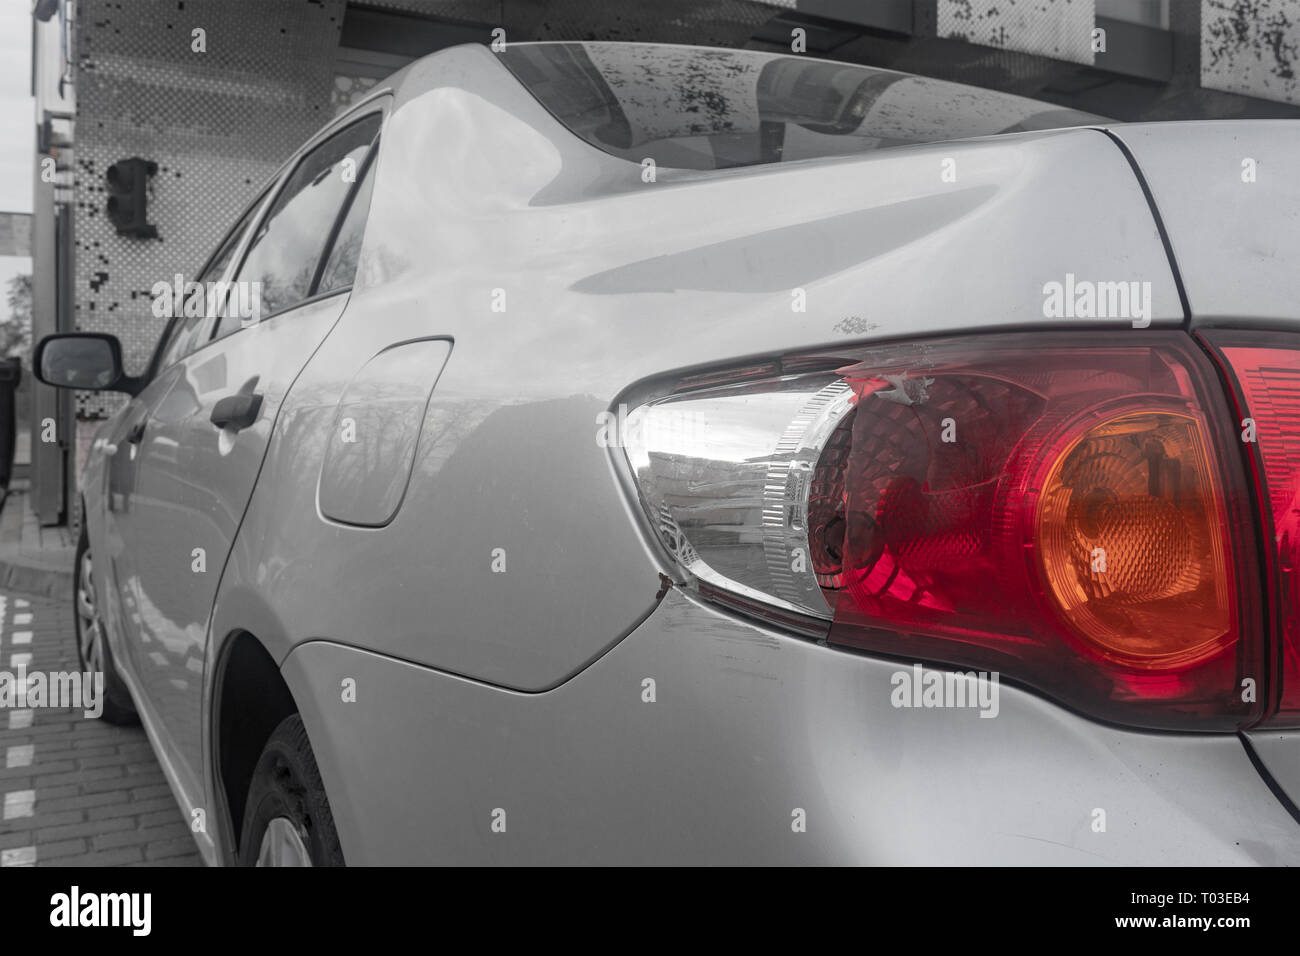 broken tail light on a gray car Stock Photo